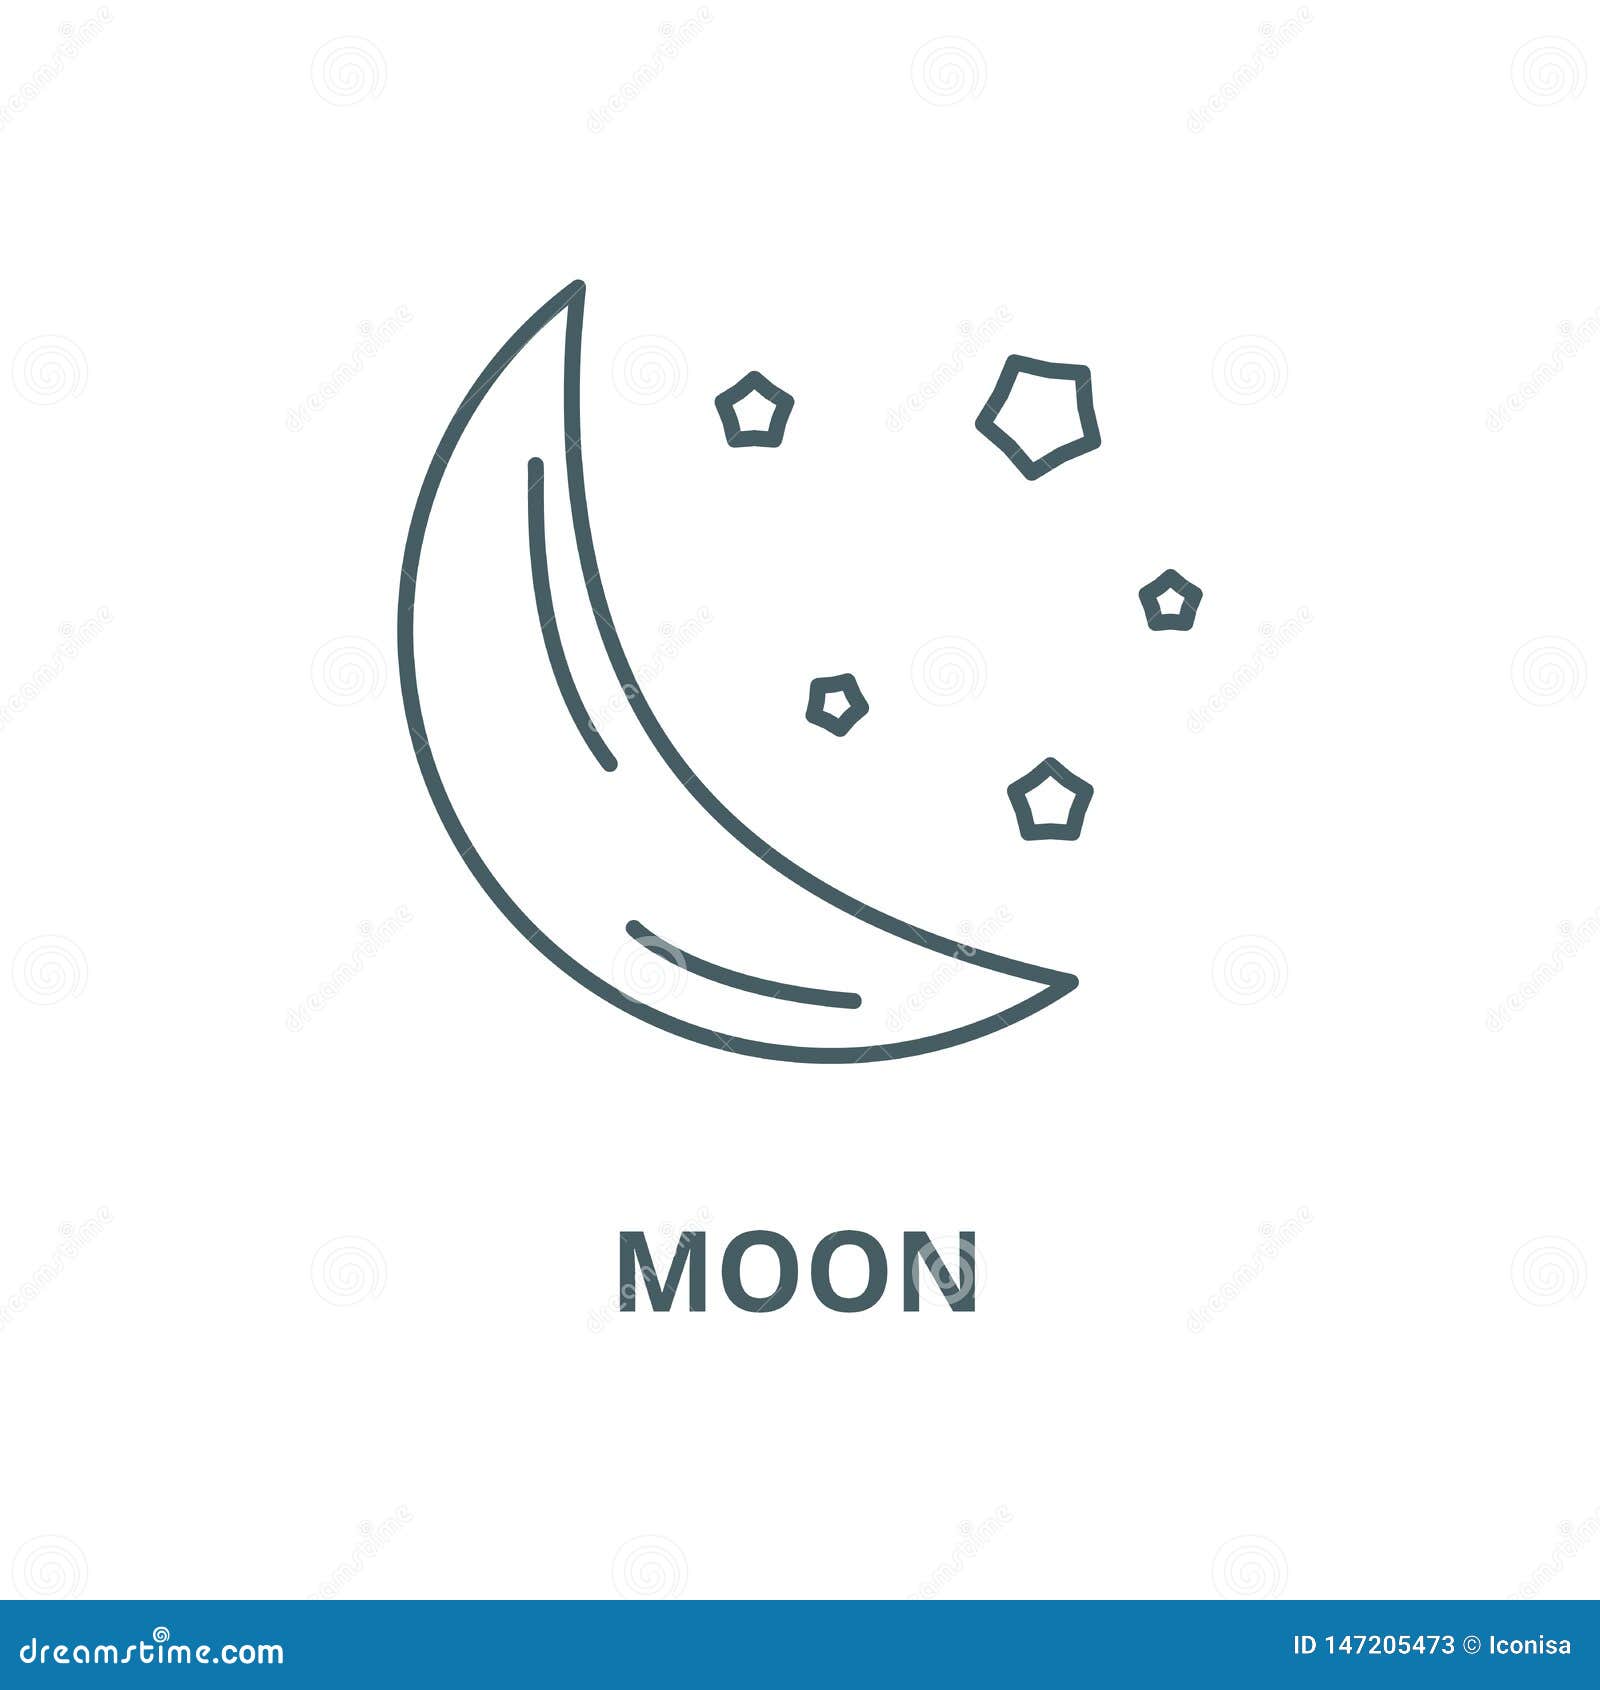 Moon line